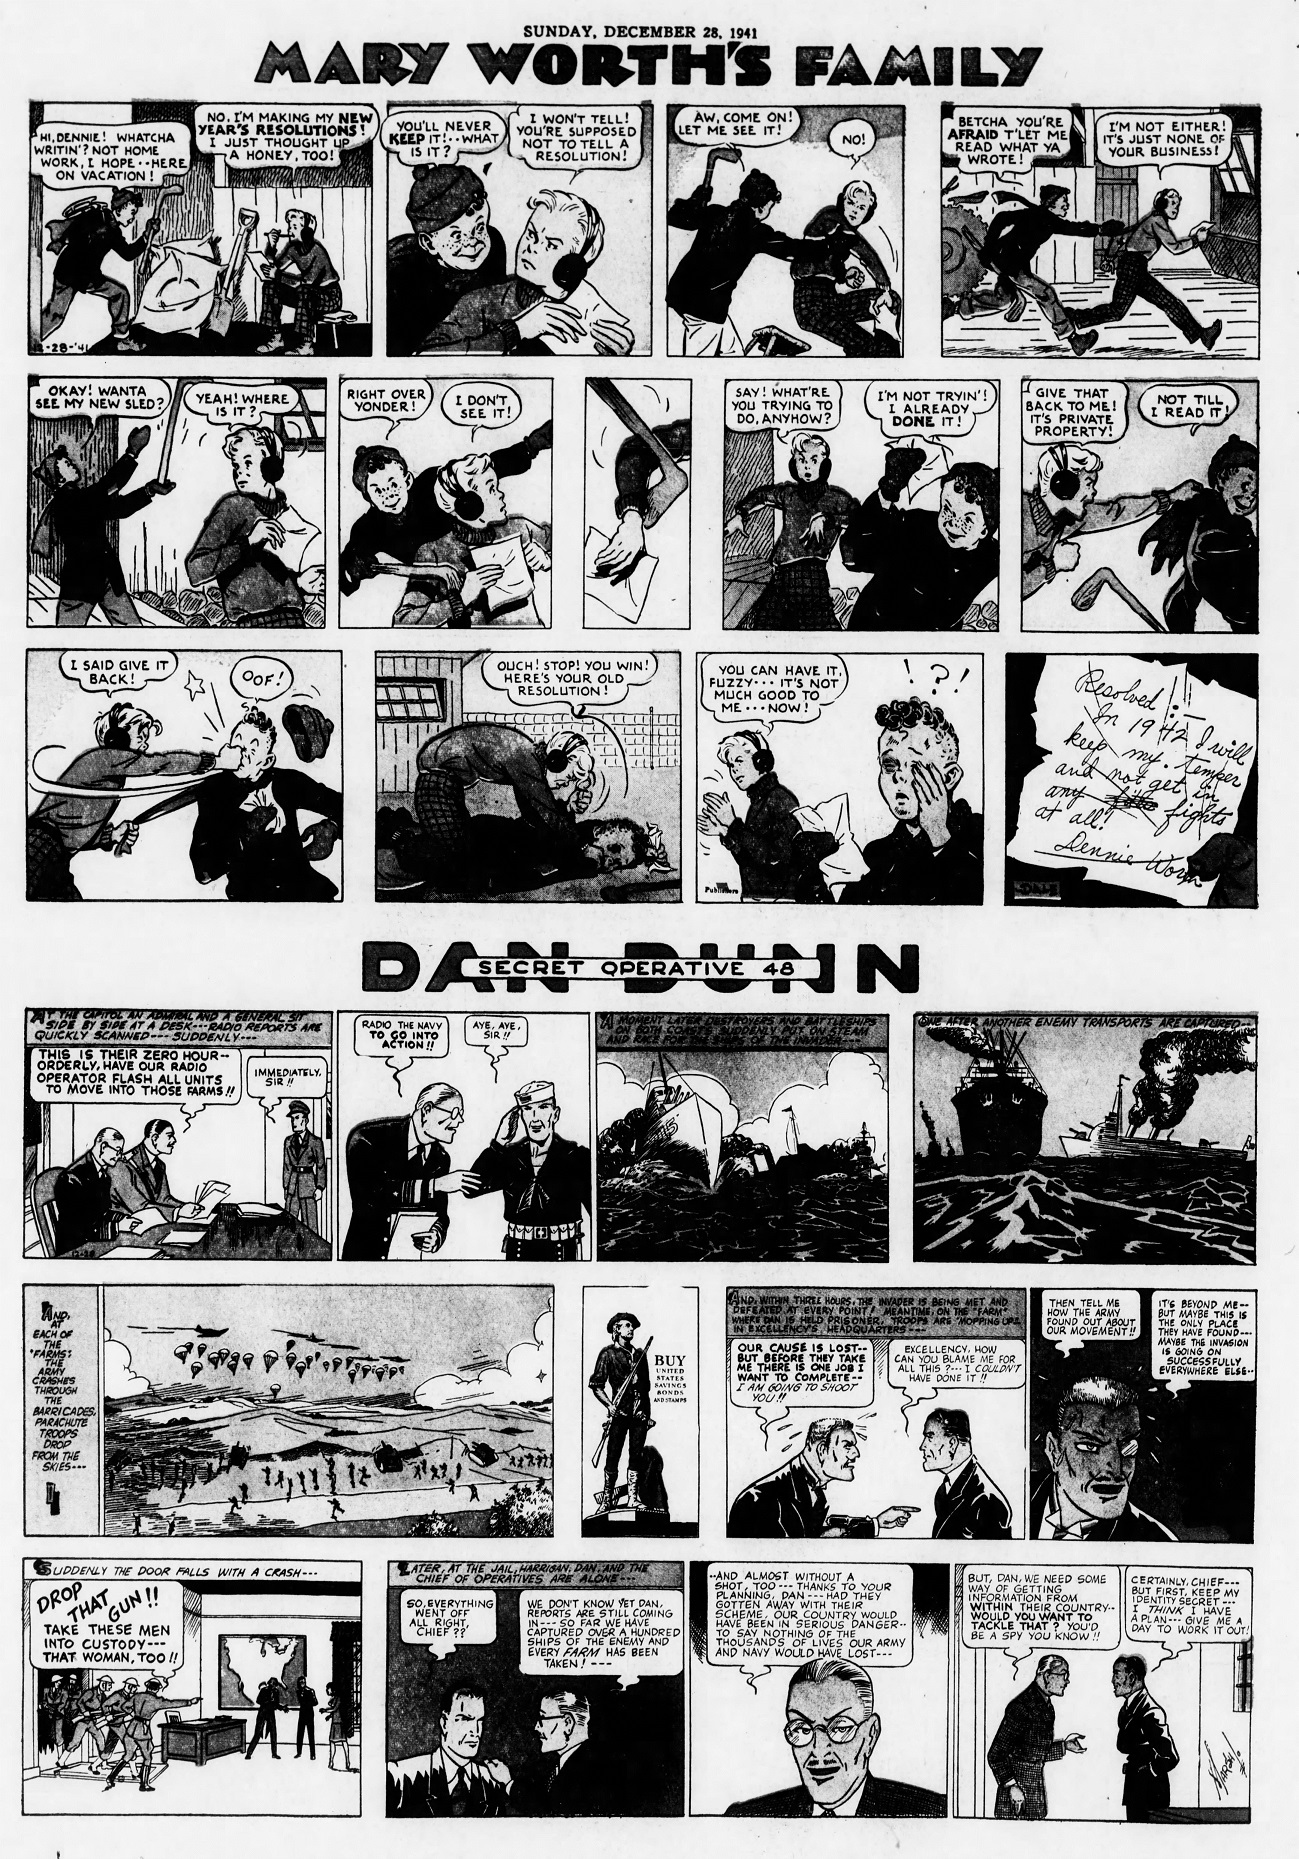 The_Brooklyn_Daily_Eagle_Sun__Dec_28__1941_(7).jpg